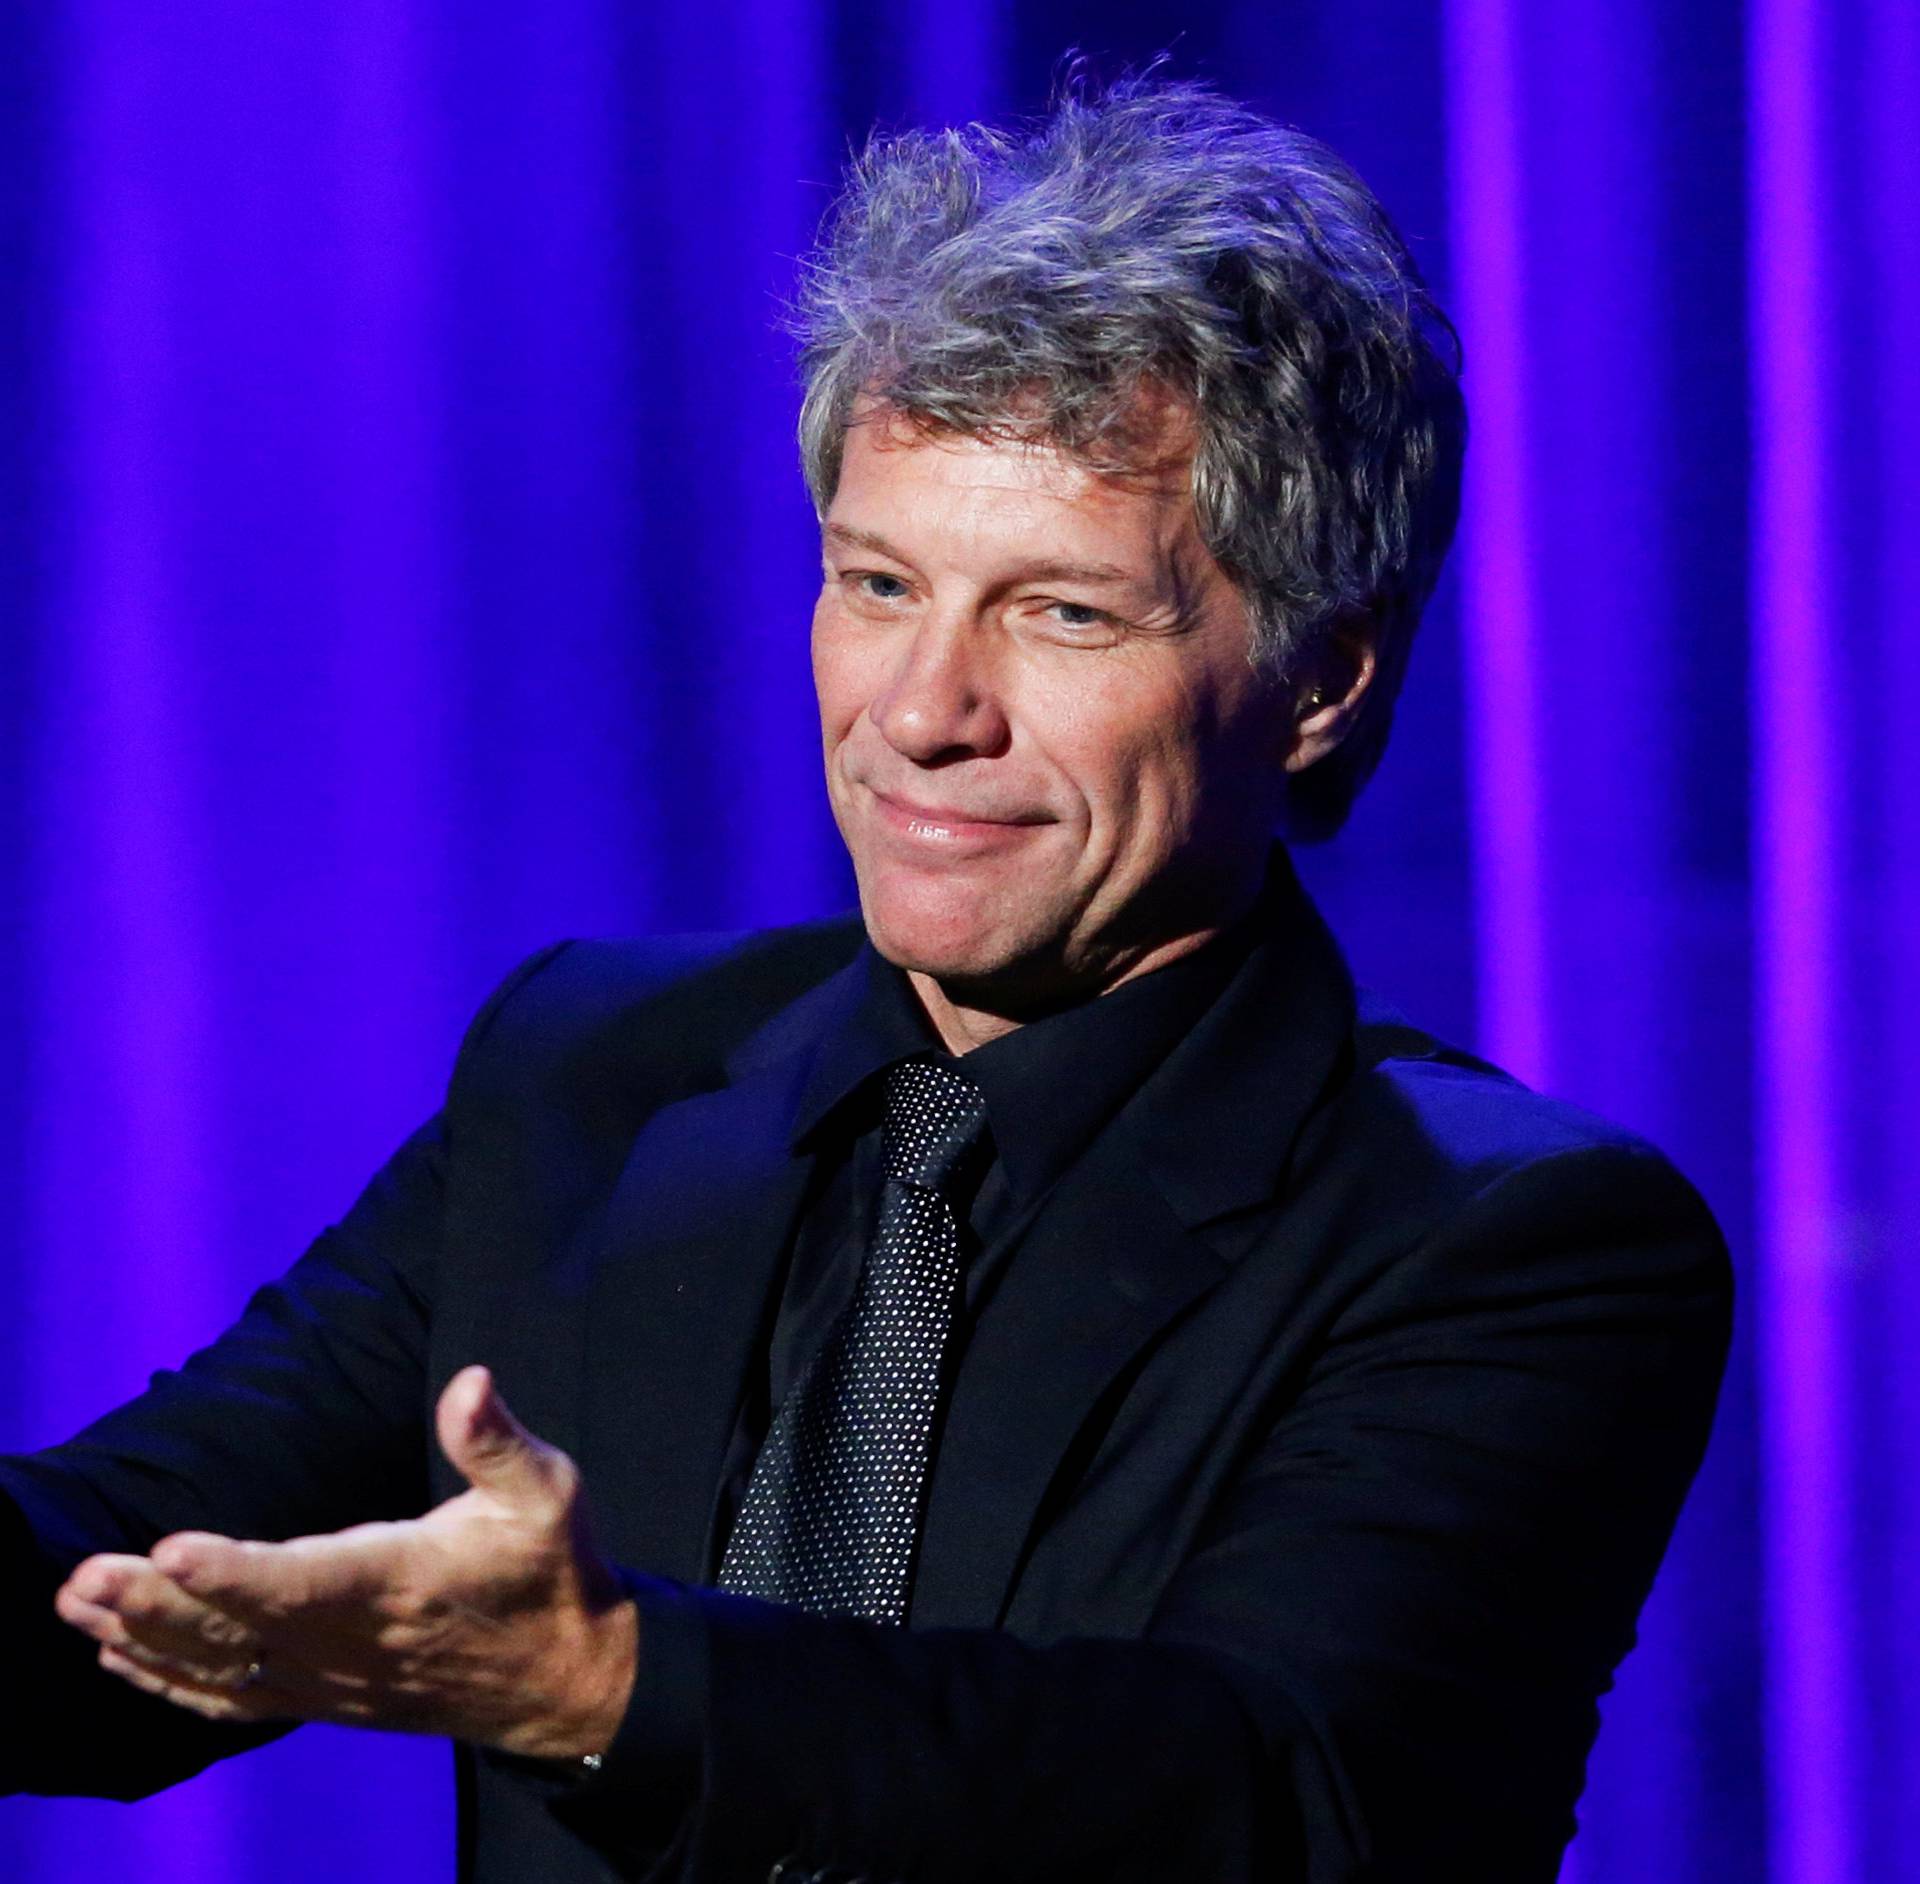 Singer Bon Jovi performs during the Clinton Global Citizen Award in New York